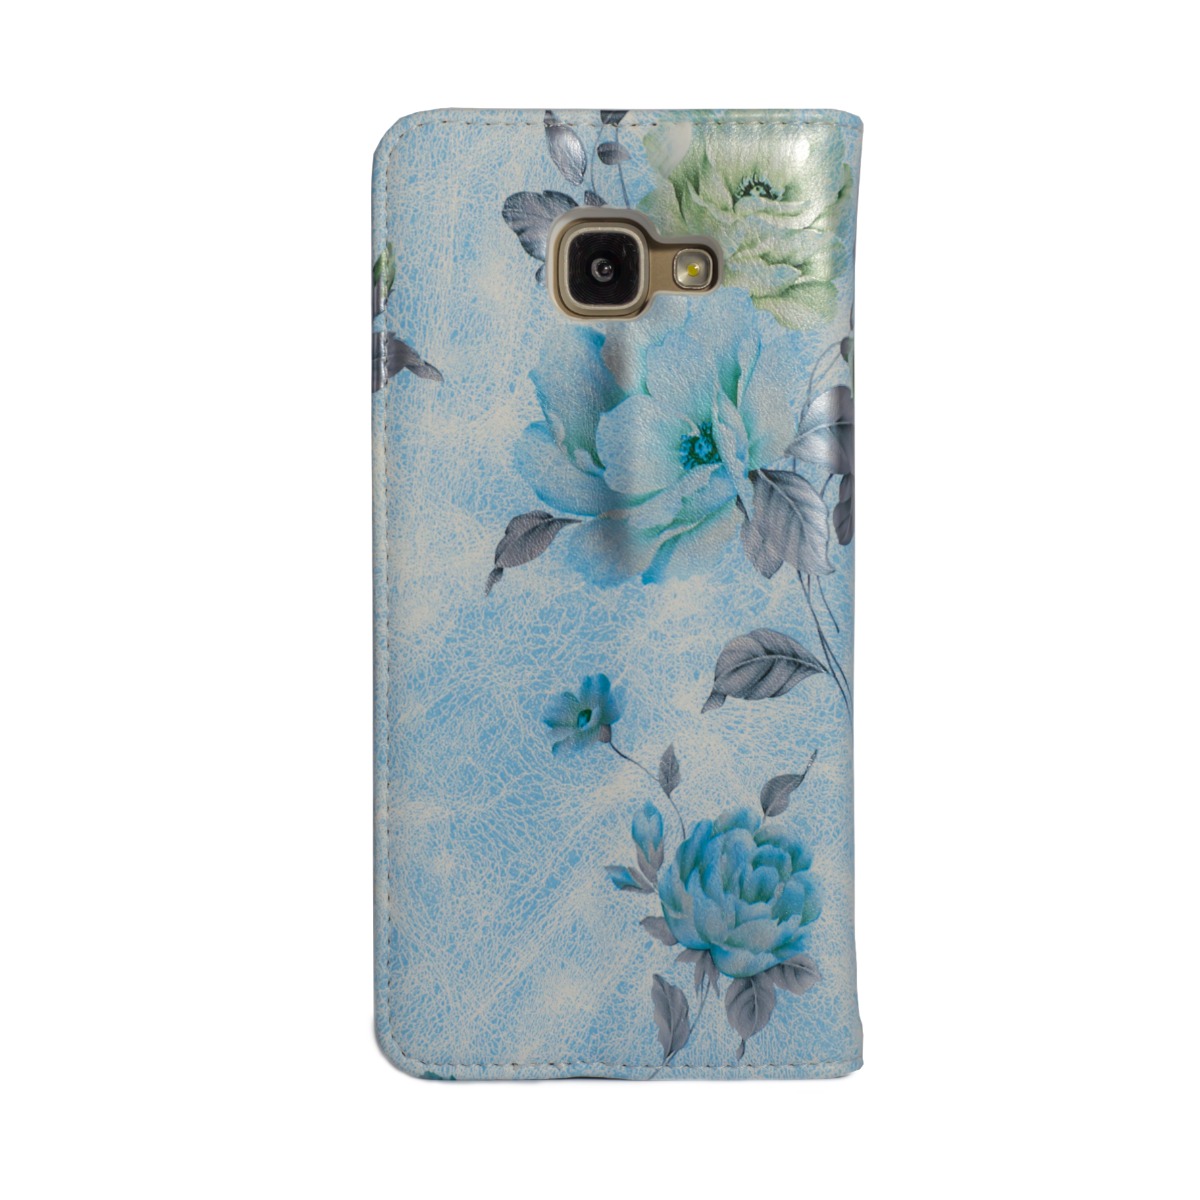 Husa Book Fashion Samsung Galaxy A5 2016, Albastru model flori thumb